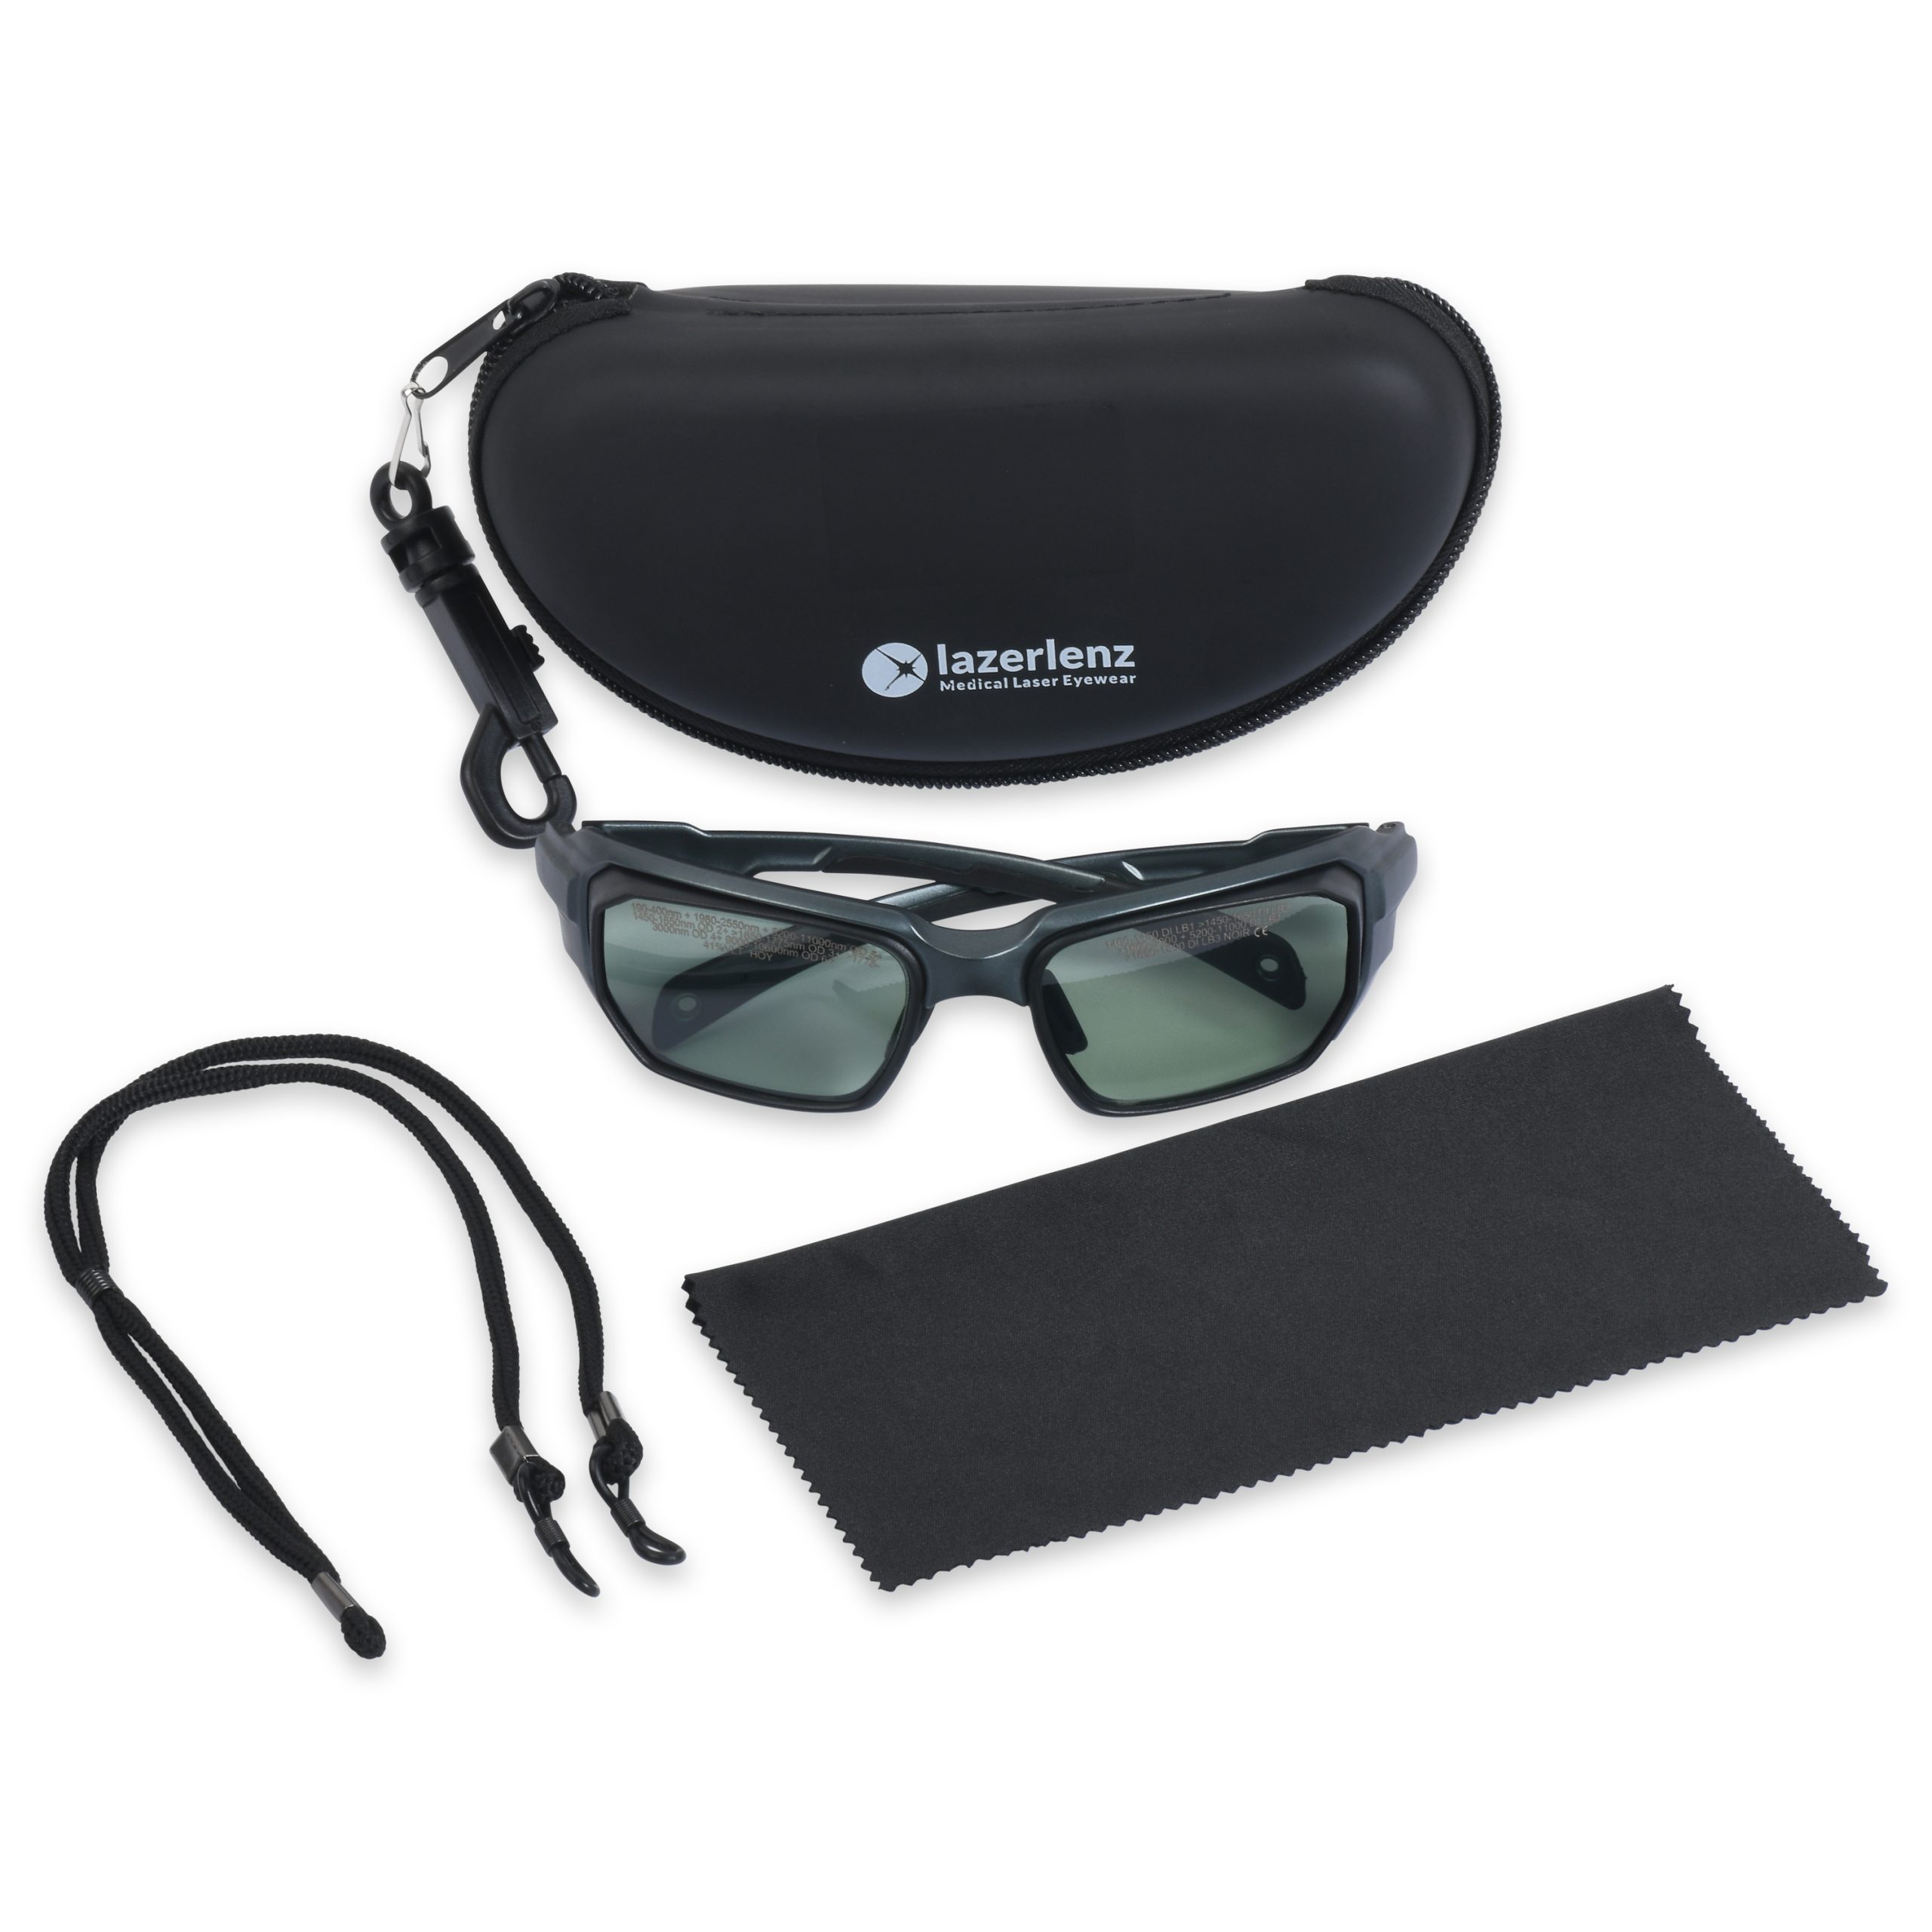 Lazerlenz Laser Eyewear Goggles for 1470 nm (Sciton Joule Halo ...